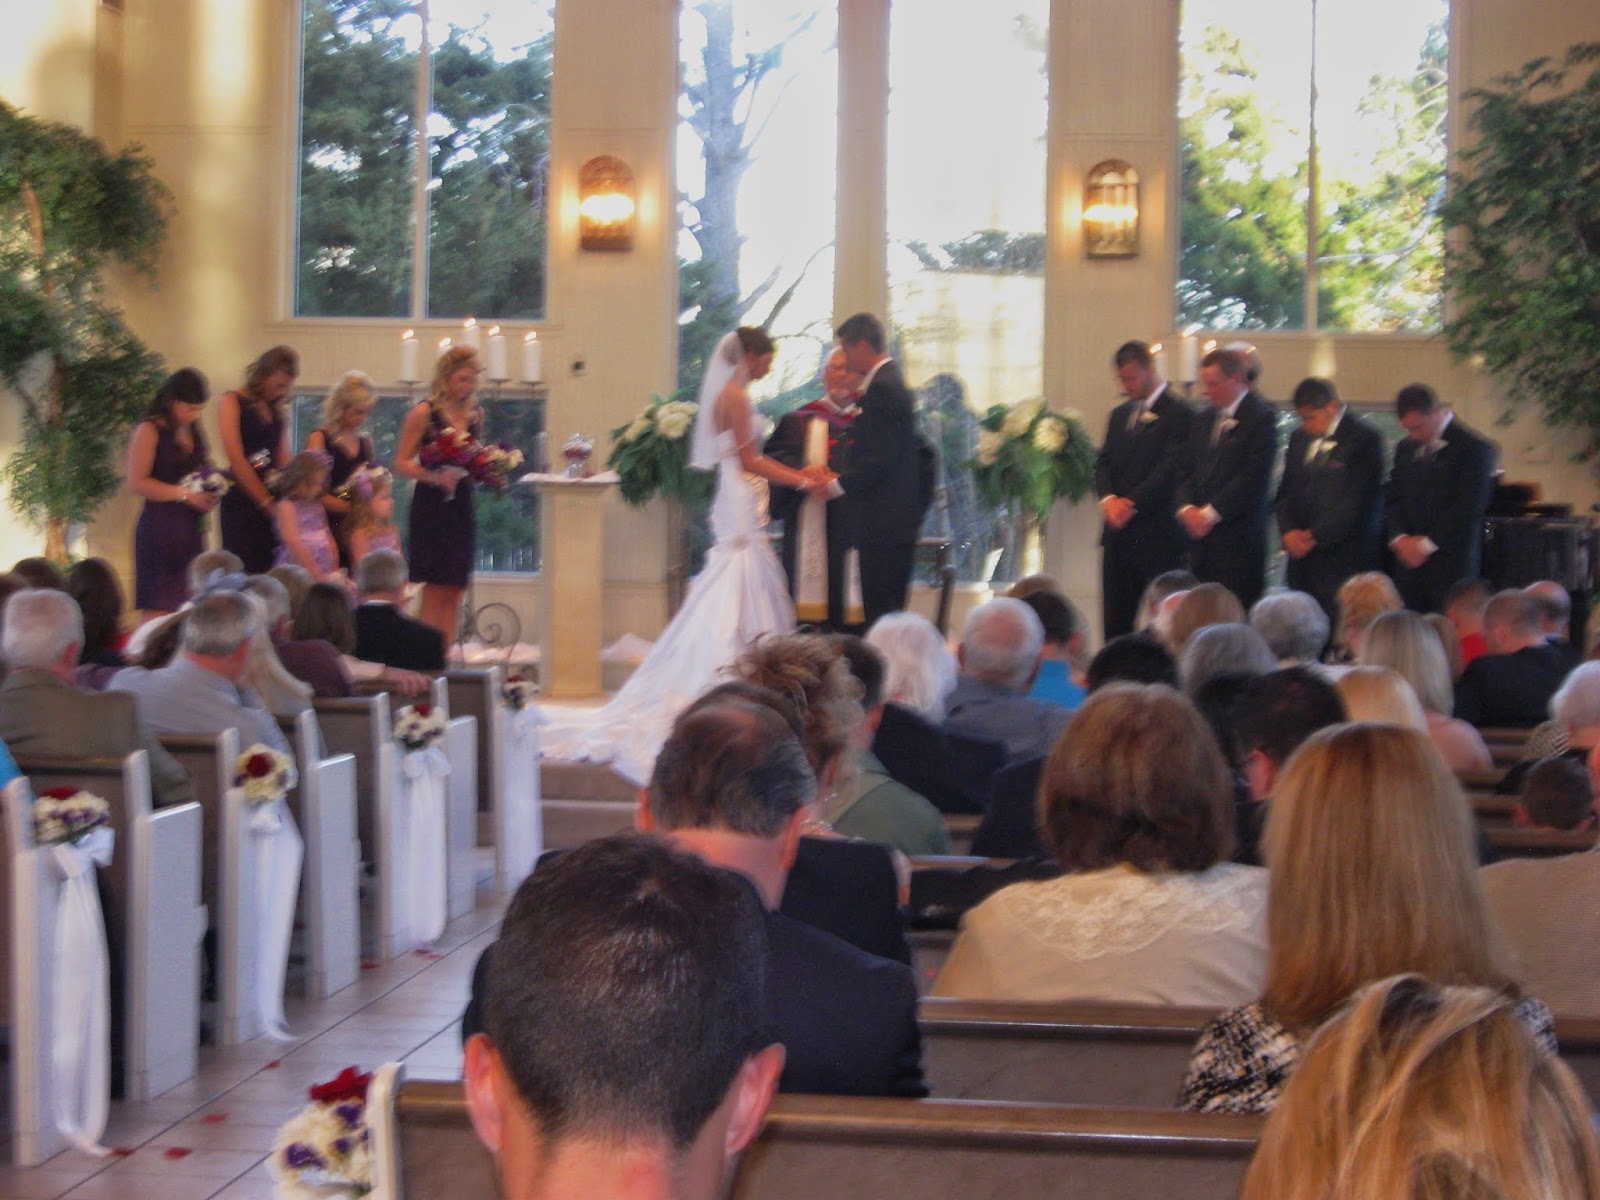 Walnut Creek Chapel: Kendra Shaw & Levi Garrett Walnut Creek Chapel  Wedding/Reception  Dr. Gene Nease - WCChapel Minister